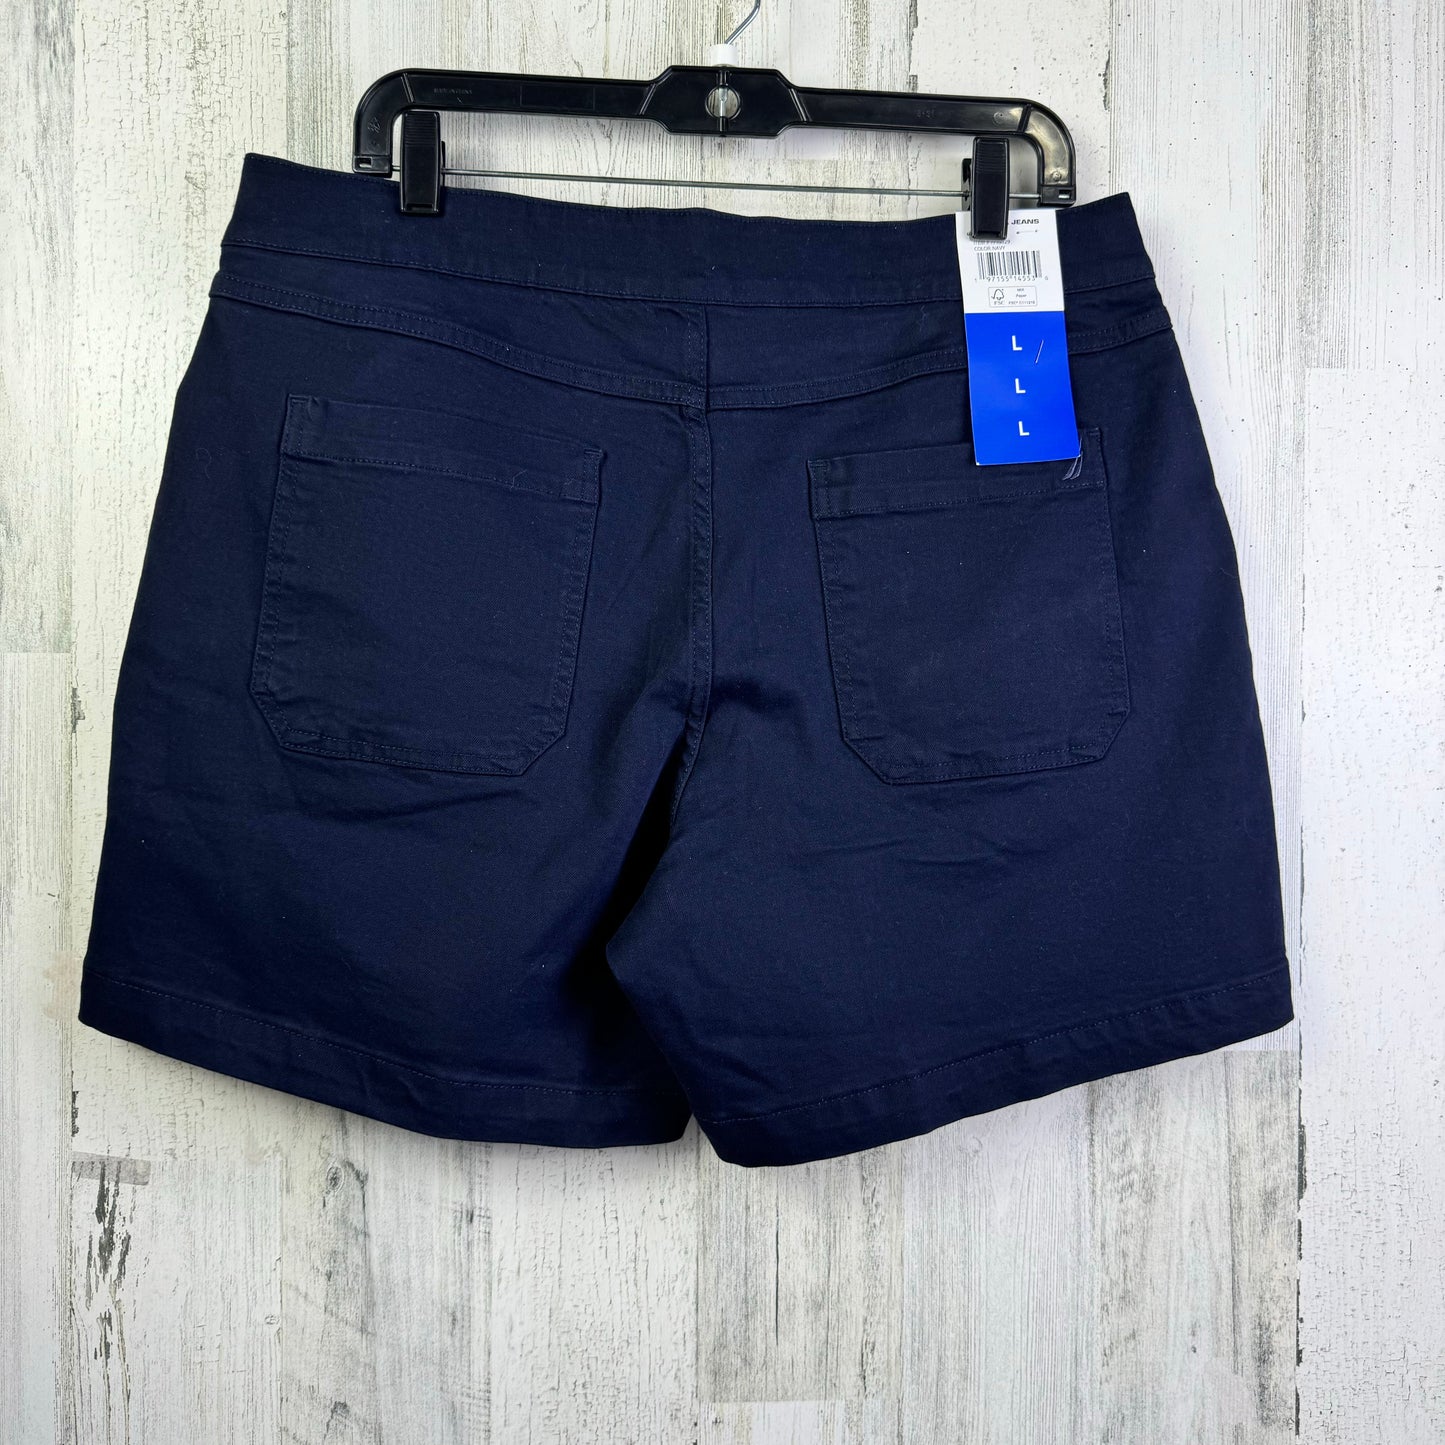 Navy Shorts Nautica, Size 12